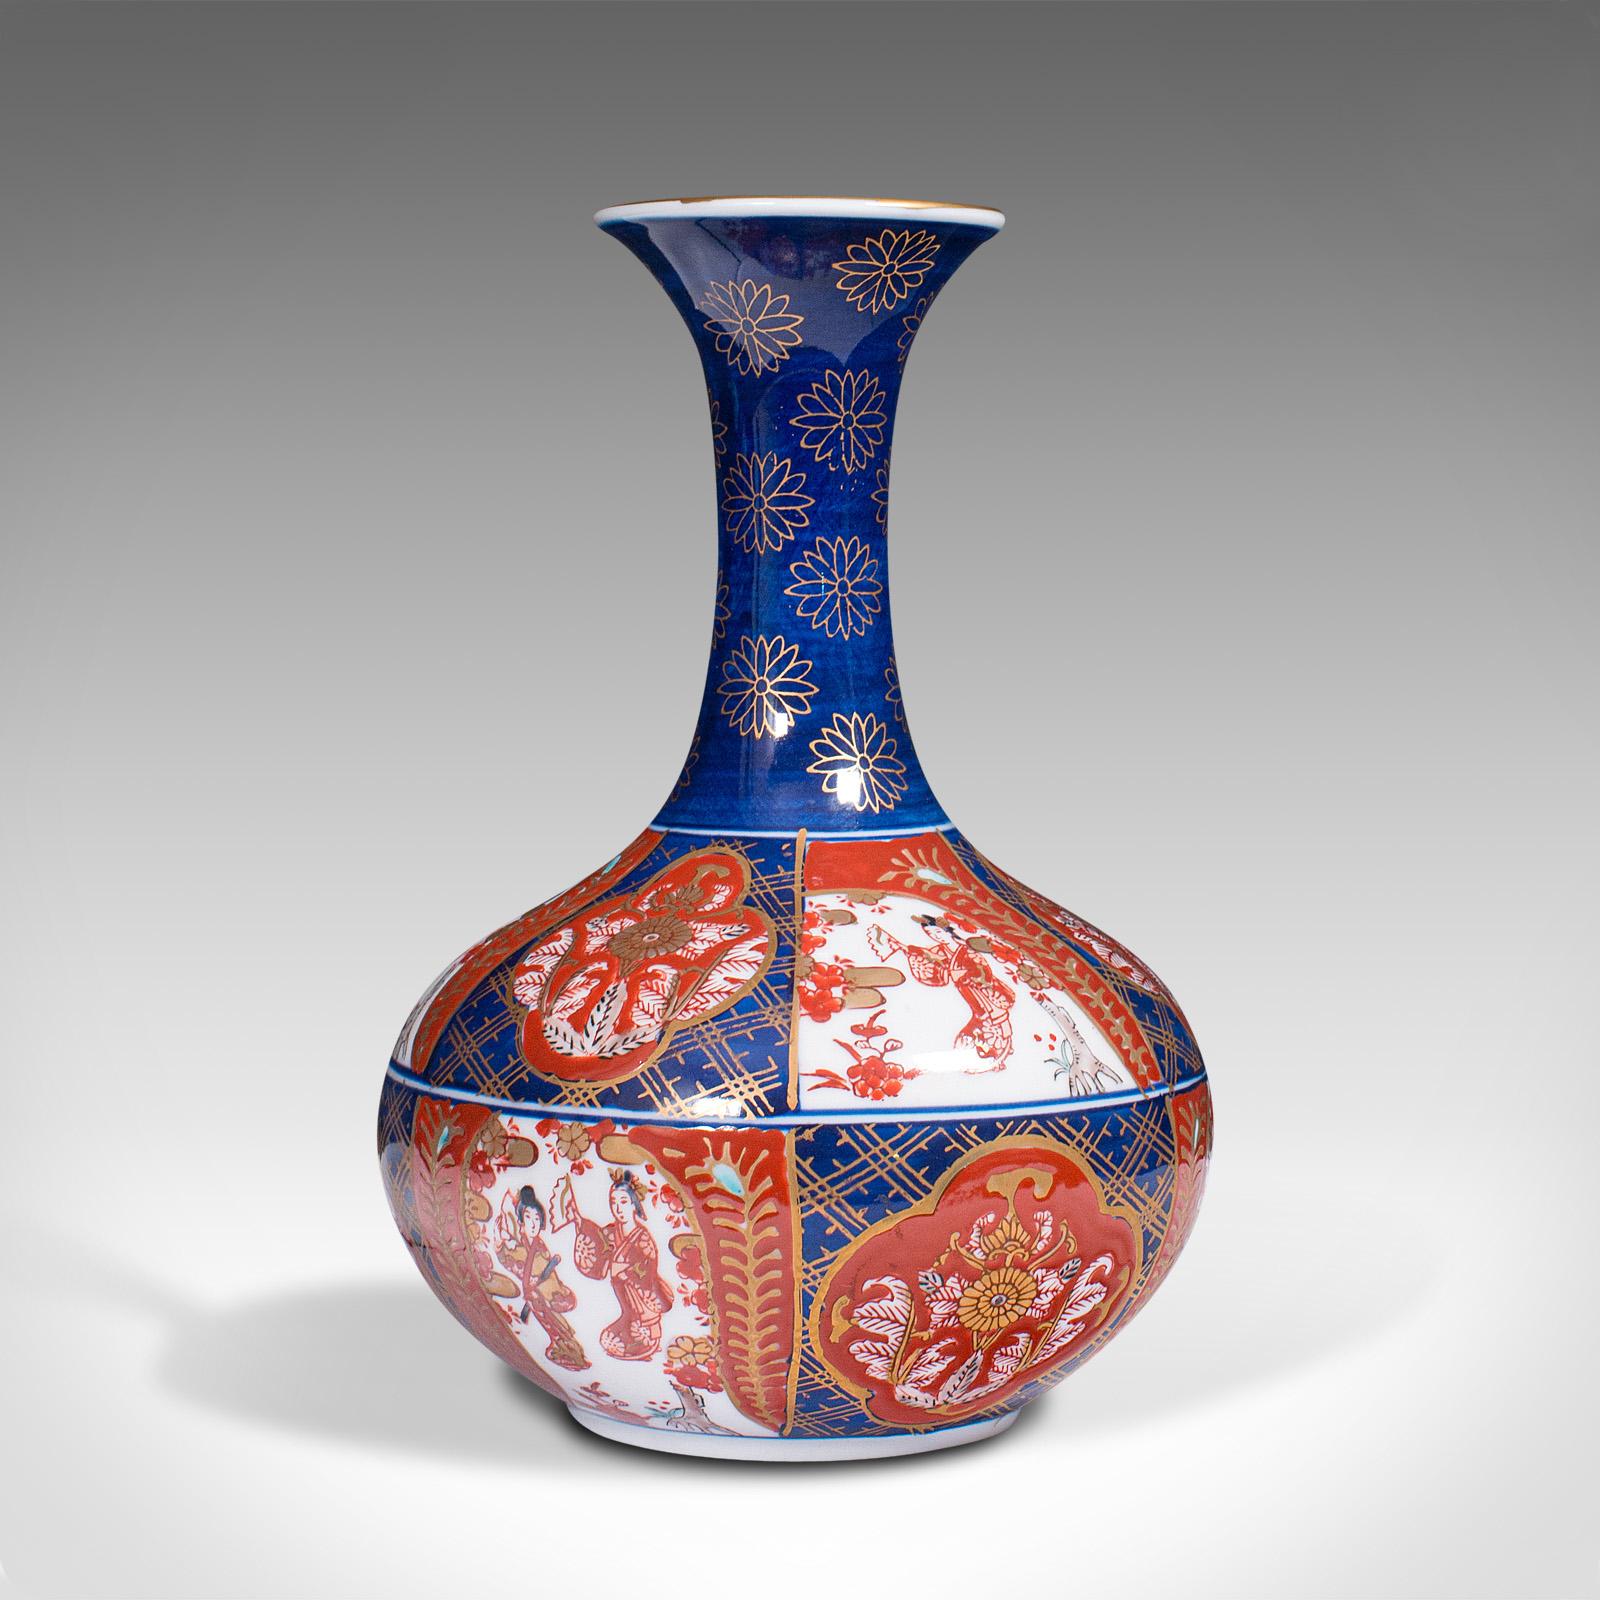 Vintage Imari Revival Flower Vase, Chinese, Ceramic, Decorative, Display Urn For Sale 1